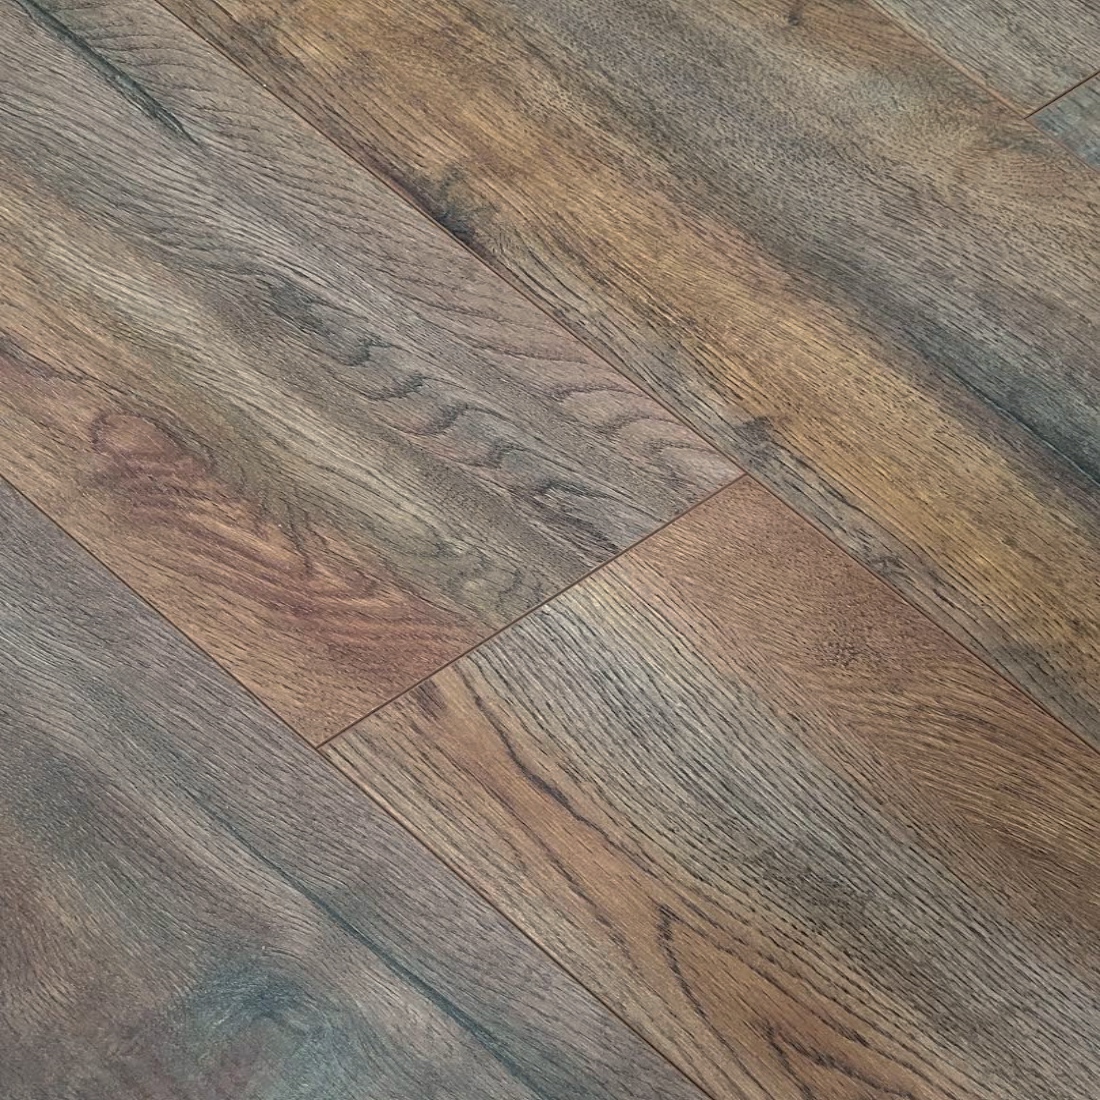 Kaindl fiorano oak 8mm v groove laminate flooring SAMPLE PIECE 